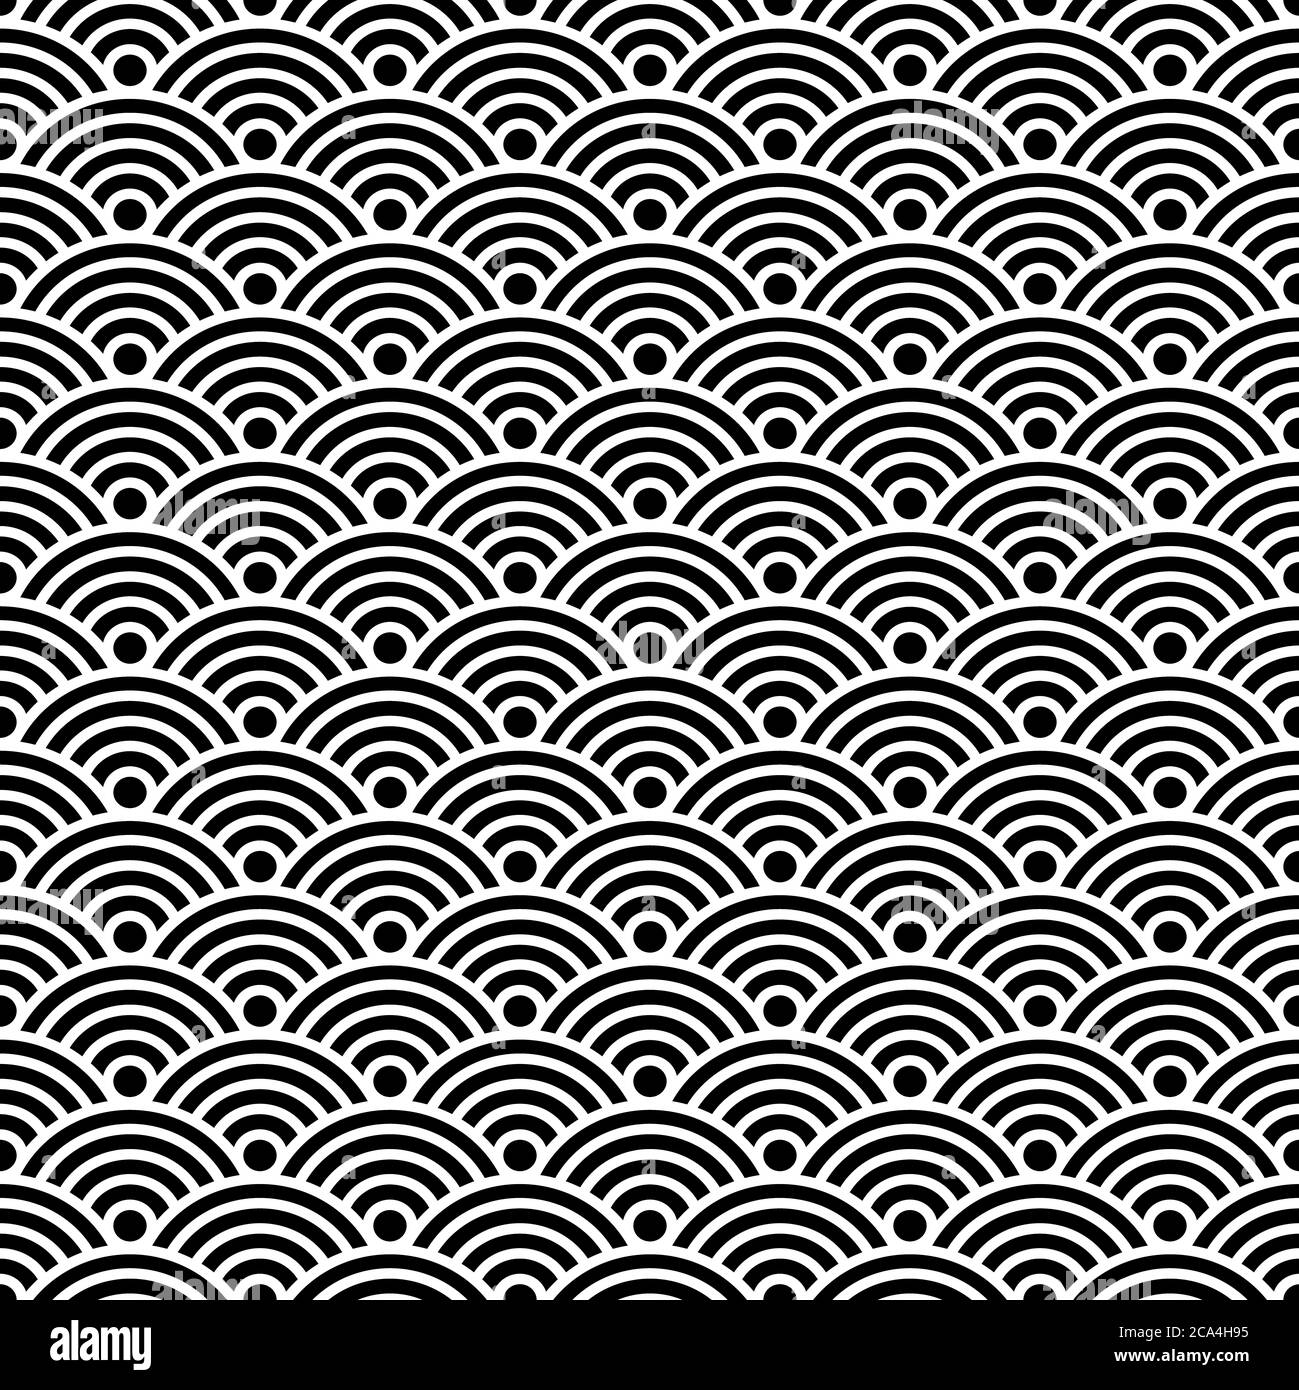 Japanese geometric background Wave seamless pattern Stock Photo